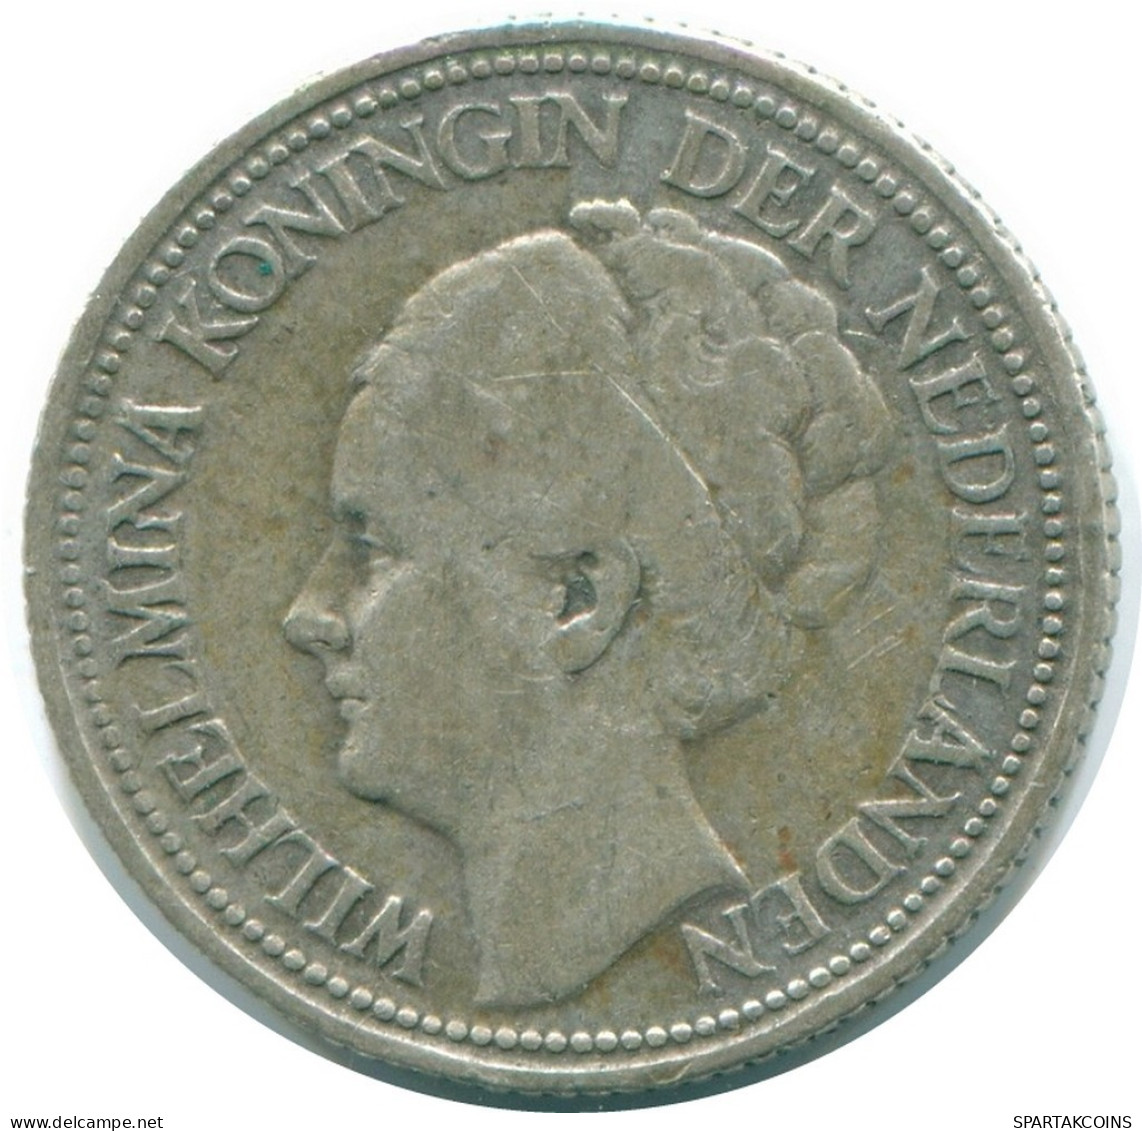 1/4 GULDEN 1947 CURACAO Netherlands SILVER Colonial Coin #NL10825.4.U.A - Curaçao